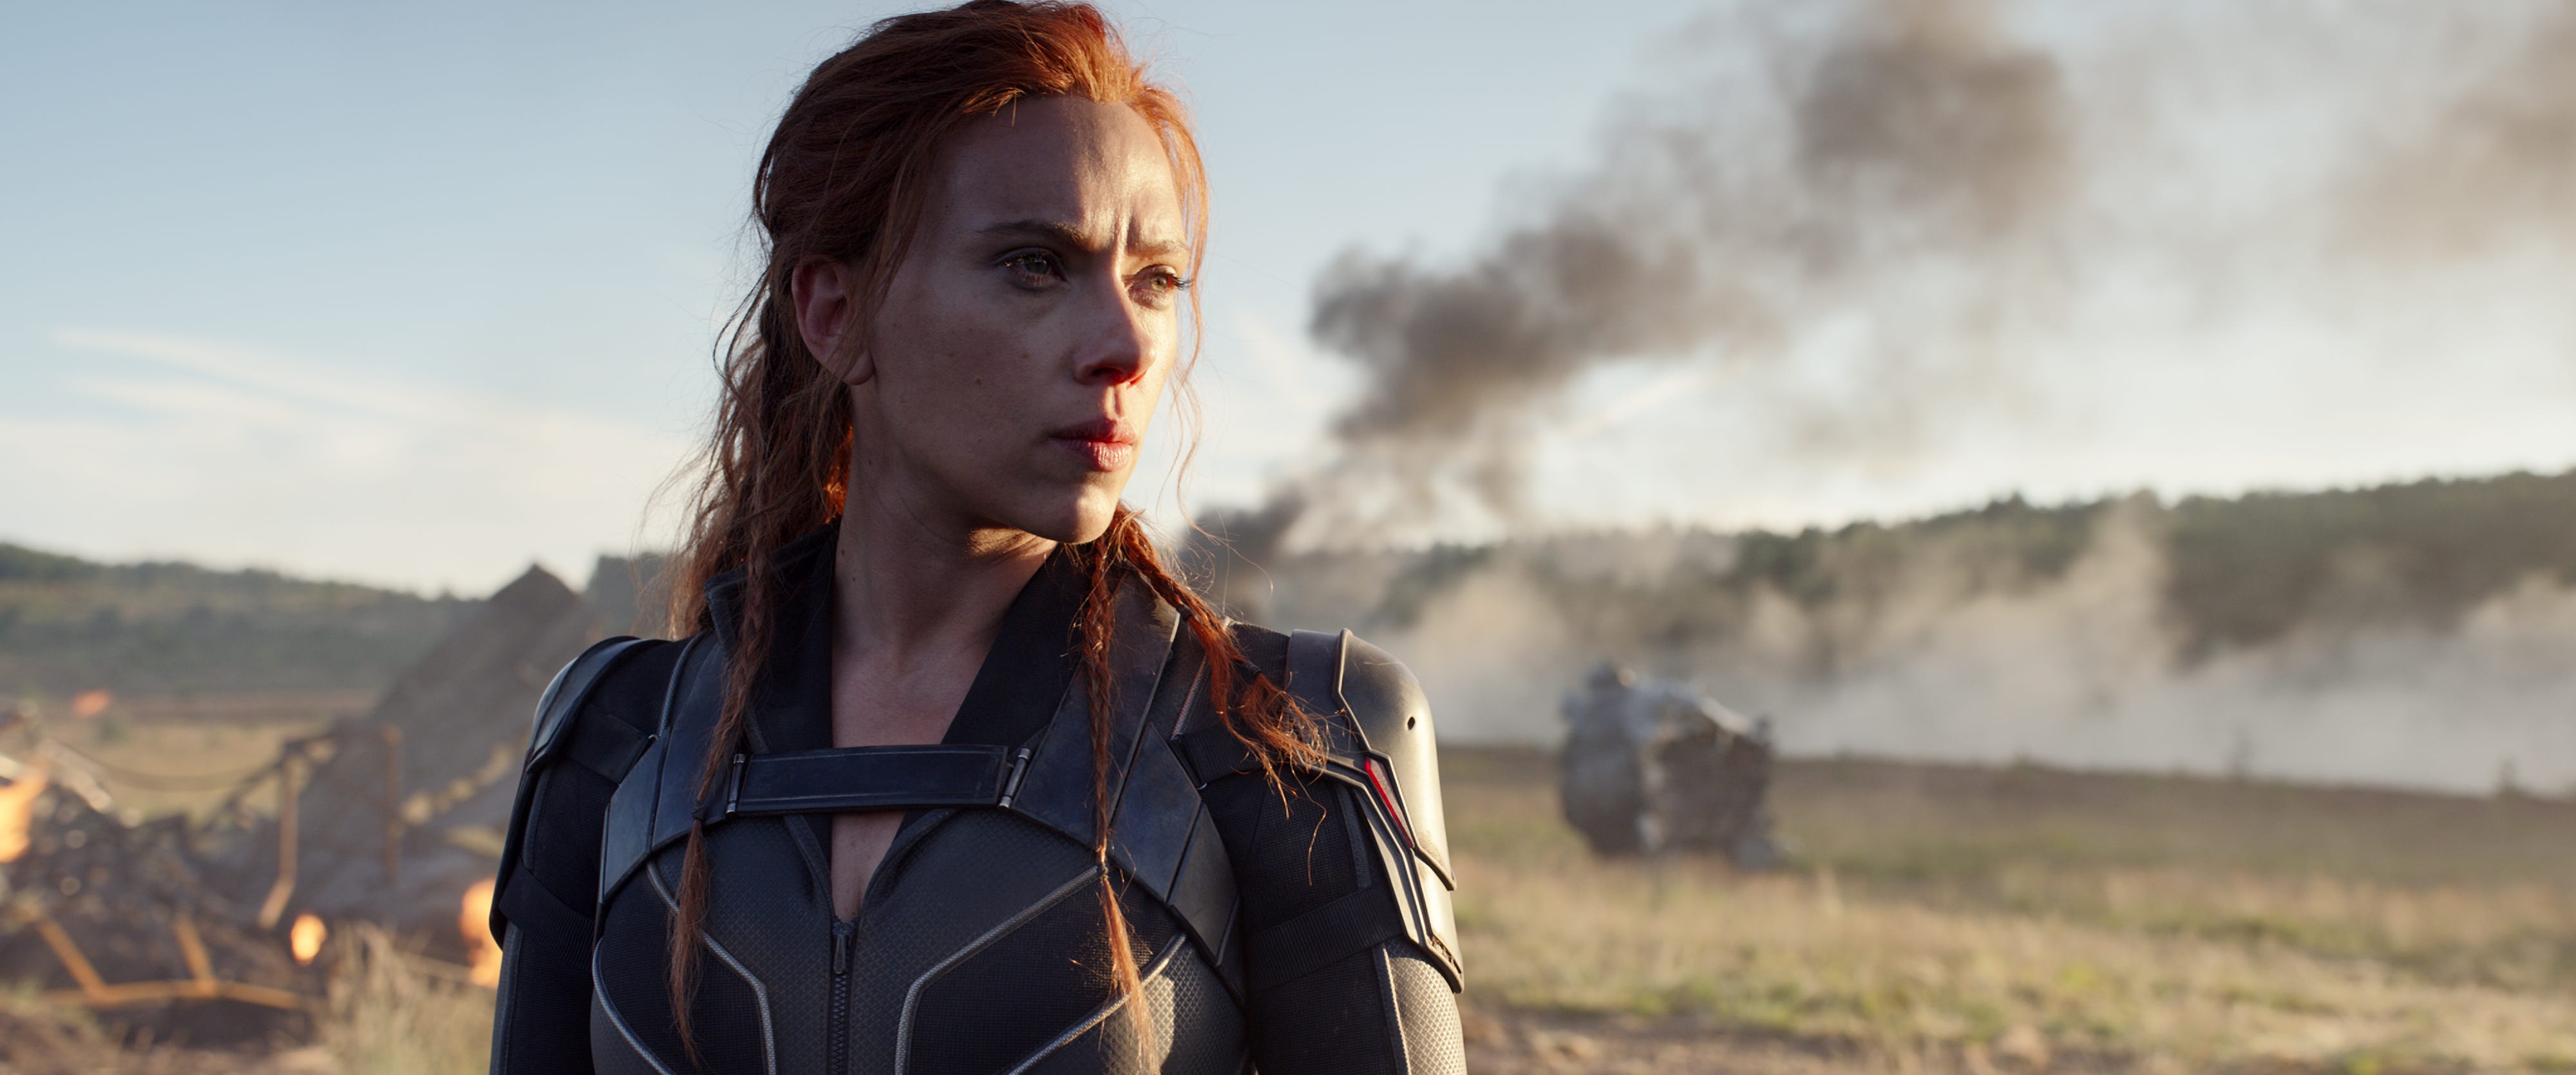 Natasha Romanoff (Scarlett Johansson) gets her own solo Marvel movie with "Black Widow."